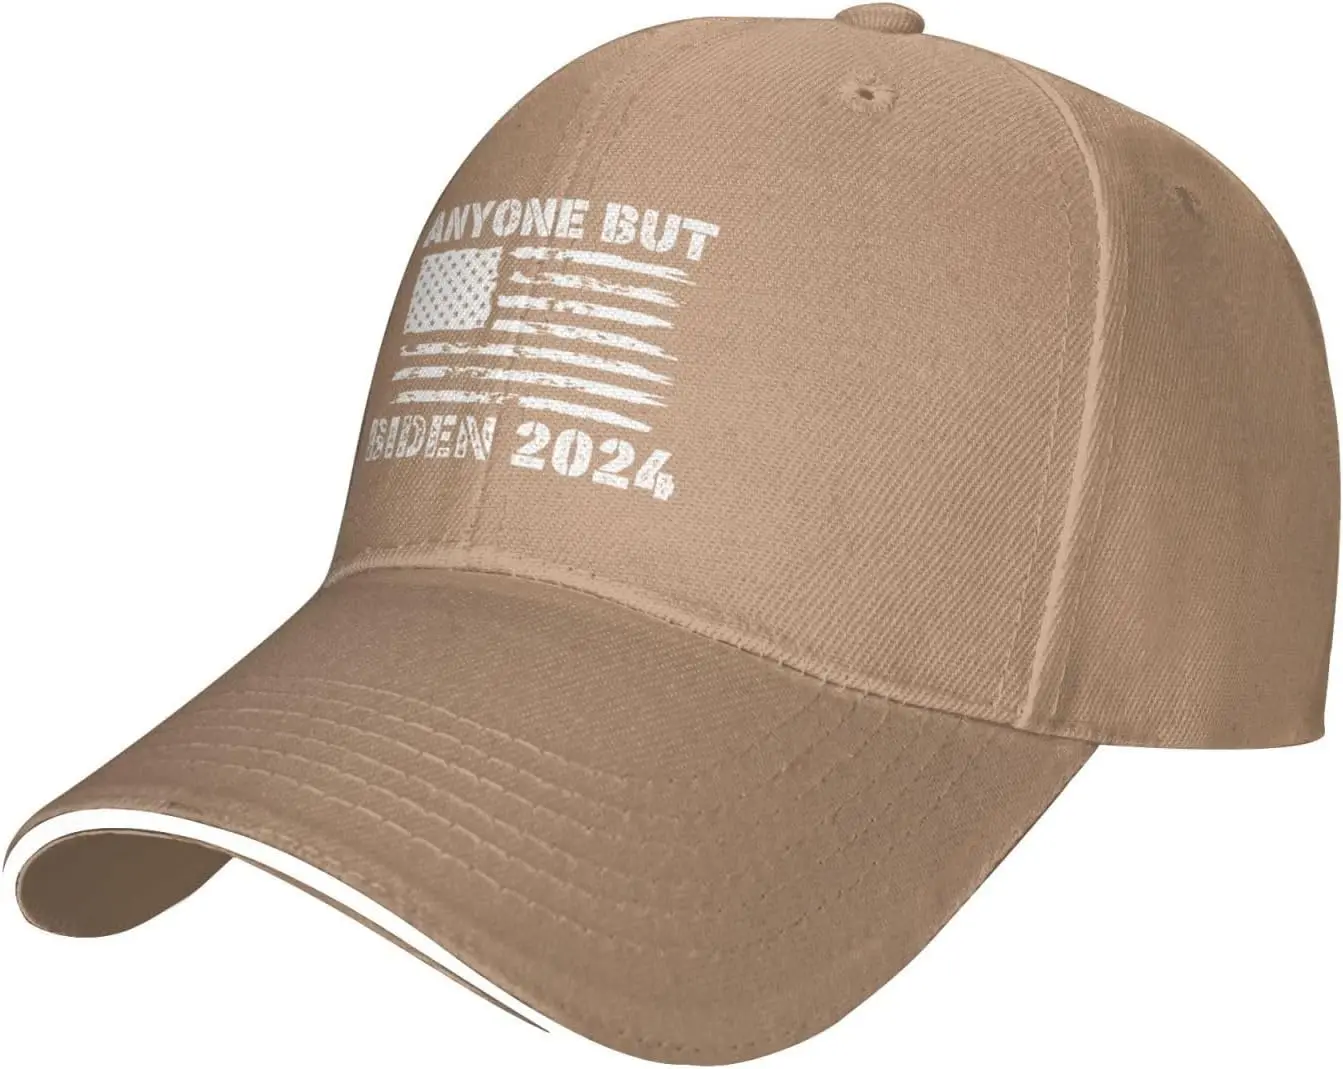 Yone but biden 2024 hat black dad hats men women adjustable funny sandwich baseball cap thumb200